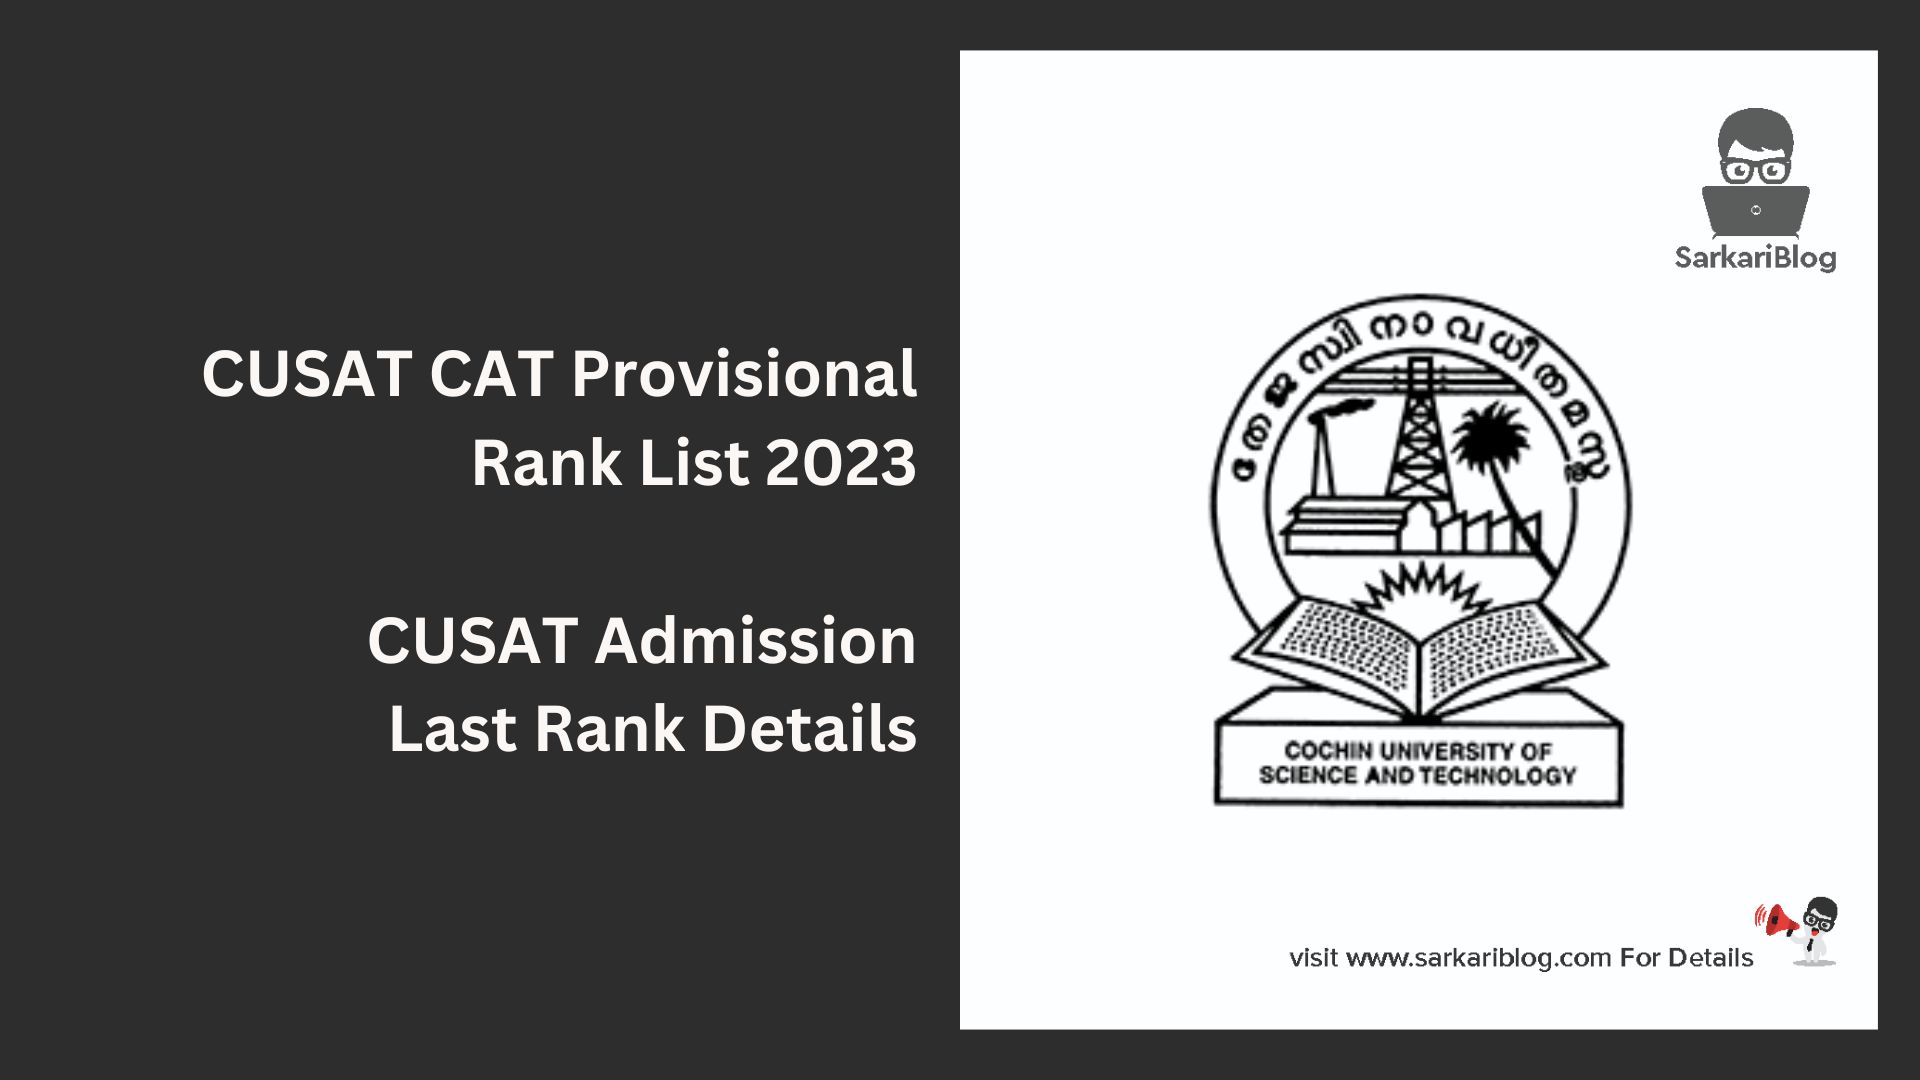 CUSAT CAT Provisional Rank List 2023